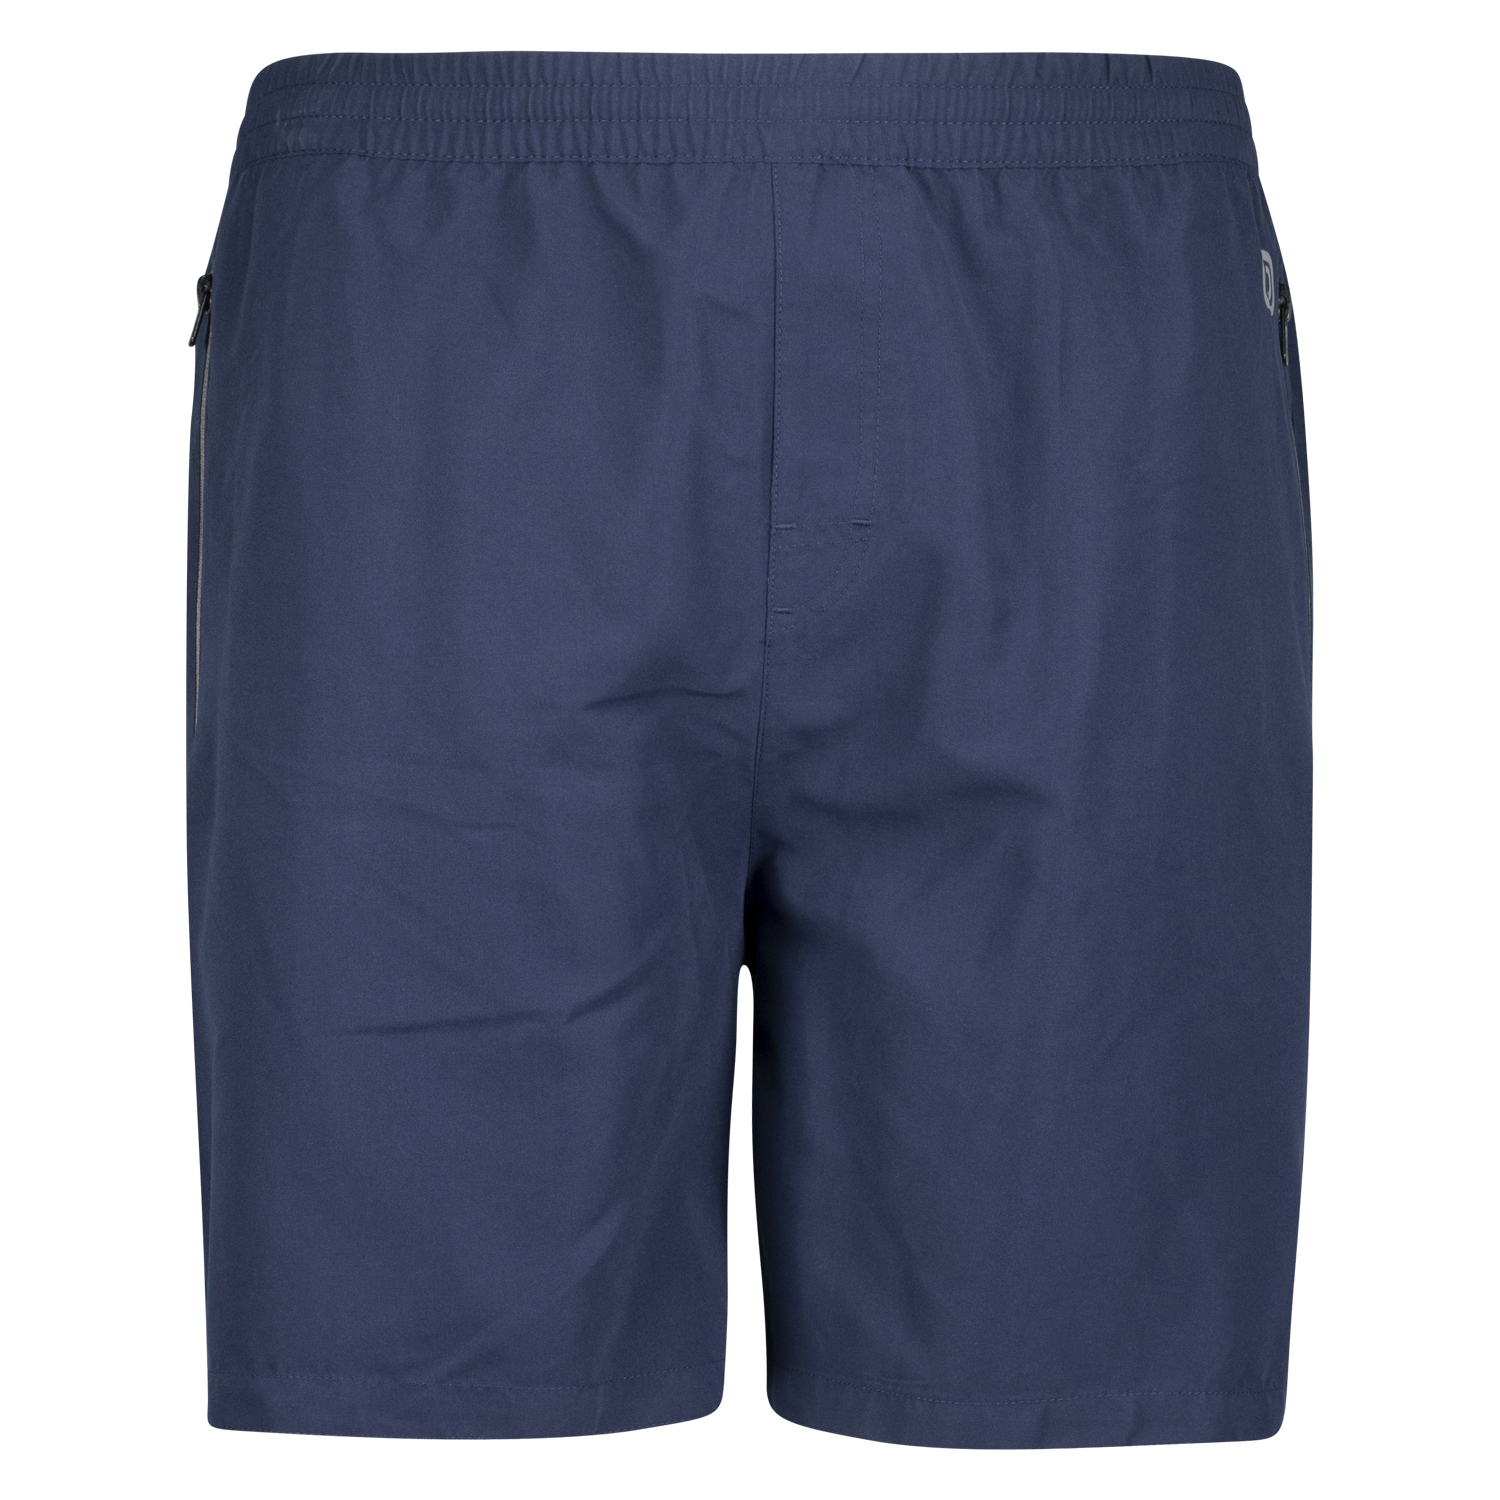 Mens Bermuda shorts Beachbermuda Serie Otto by Adamo in big sizes up to 14XL